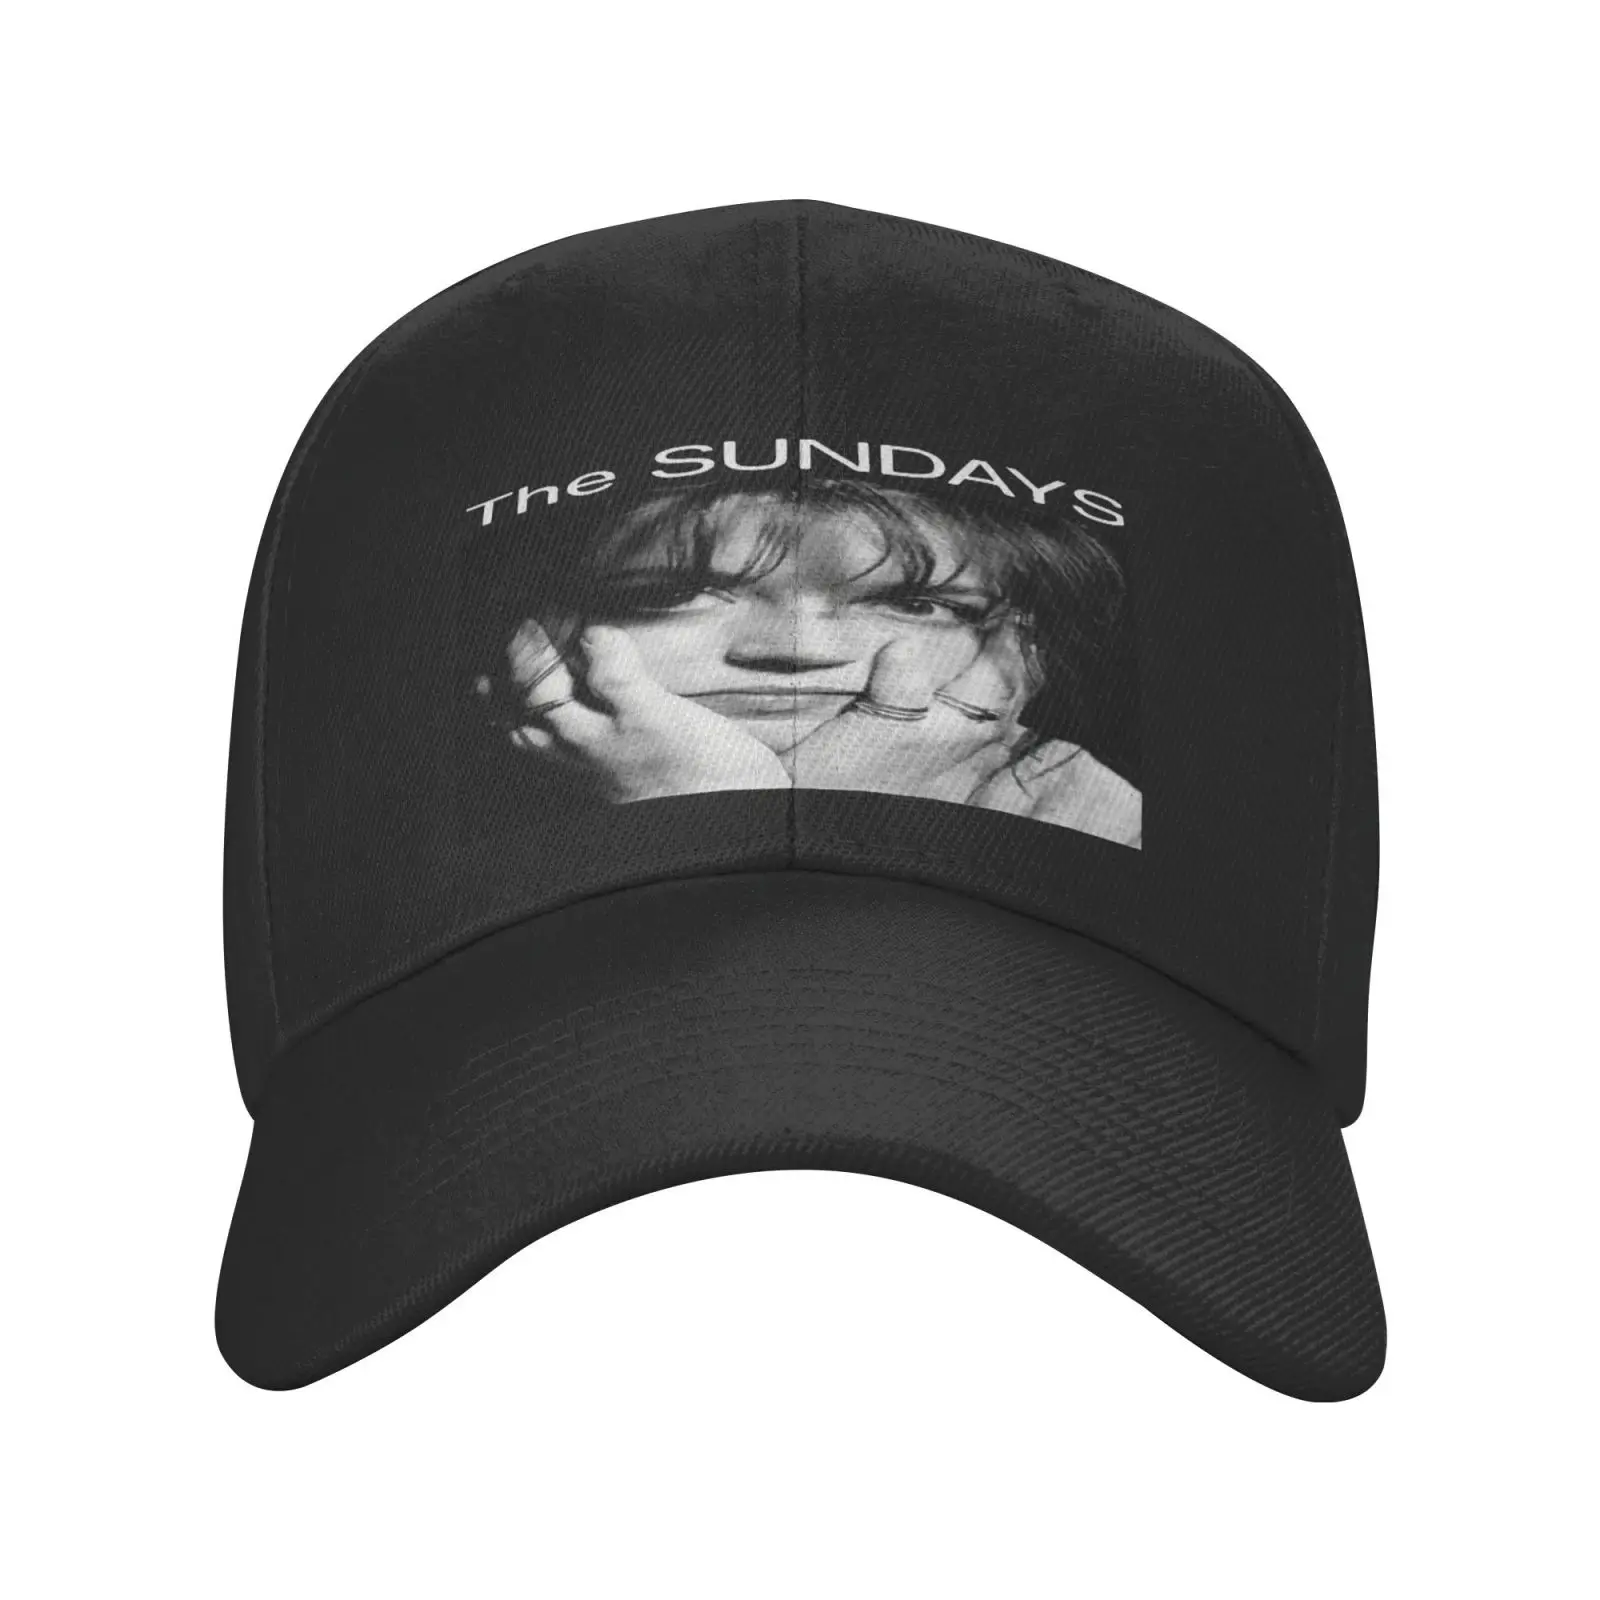 

Воскресная шапка Harriet Wheeler, мужская шапка, вязаная шапка, шапка, женская шапка для гольфа, Балаклава, Мужская Дизайнерская шапка, стильная шап...